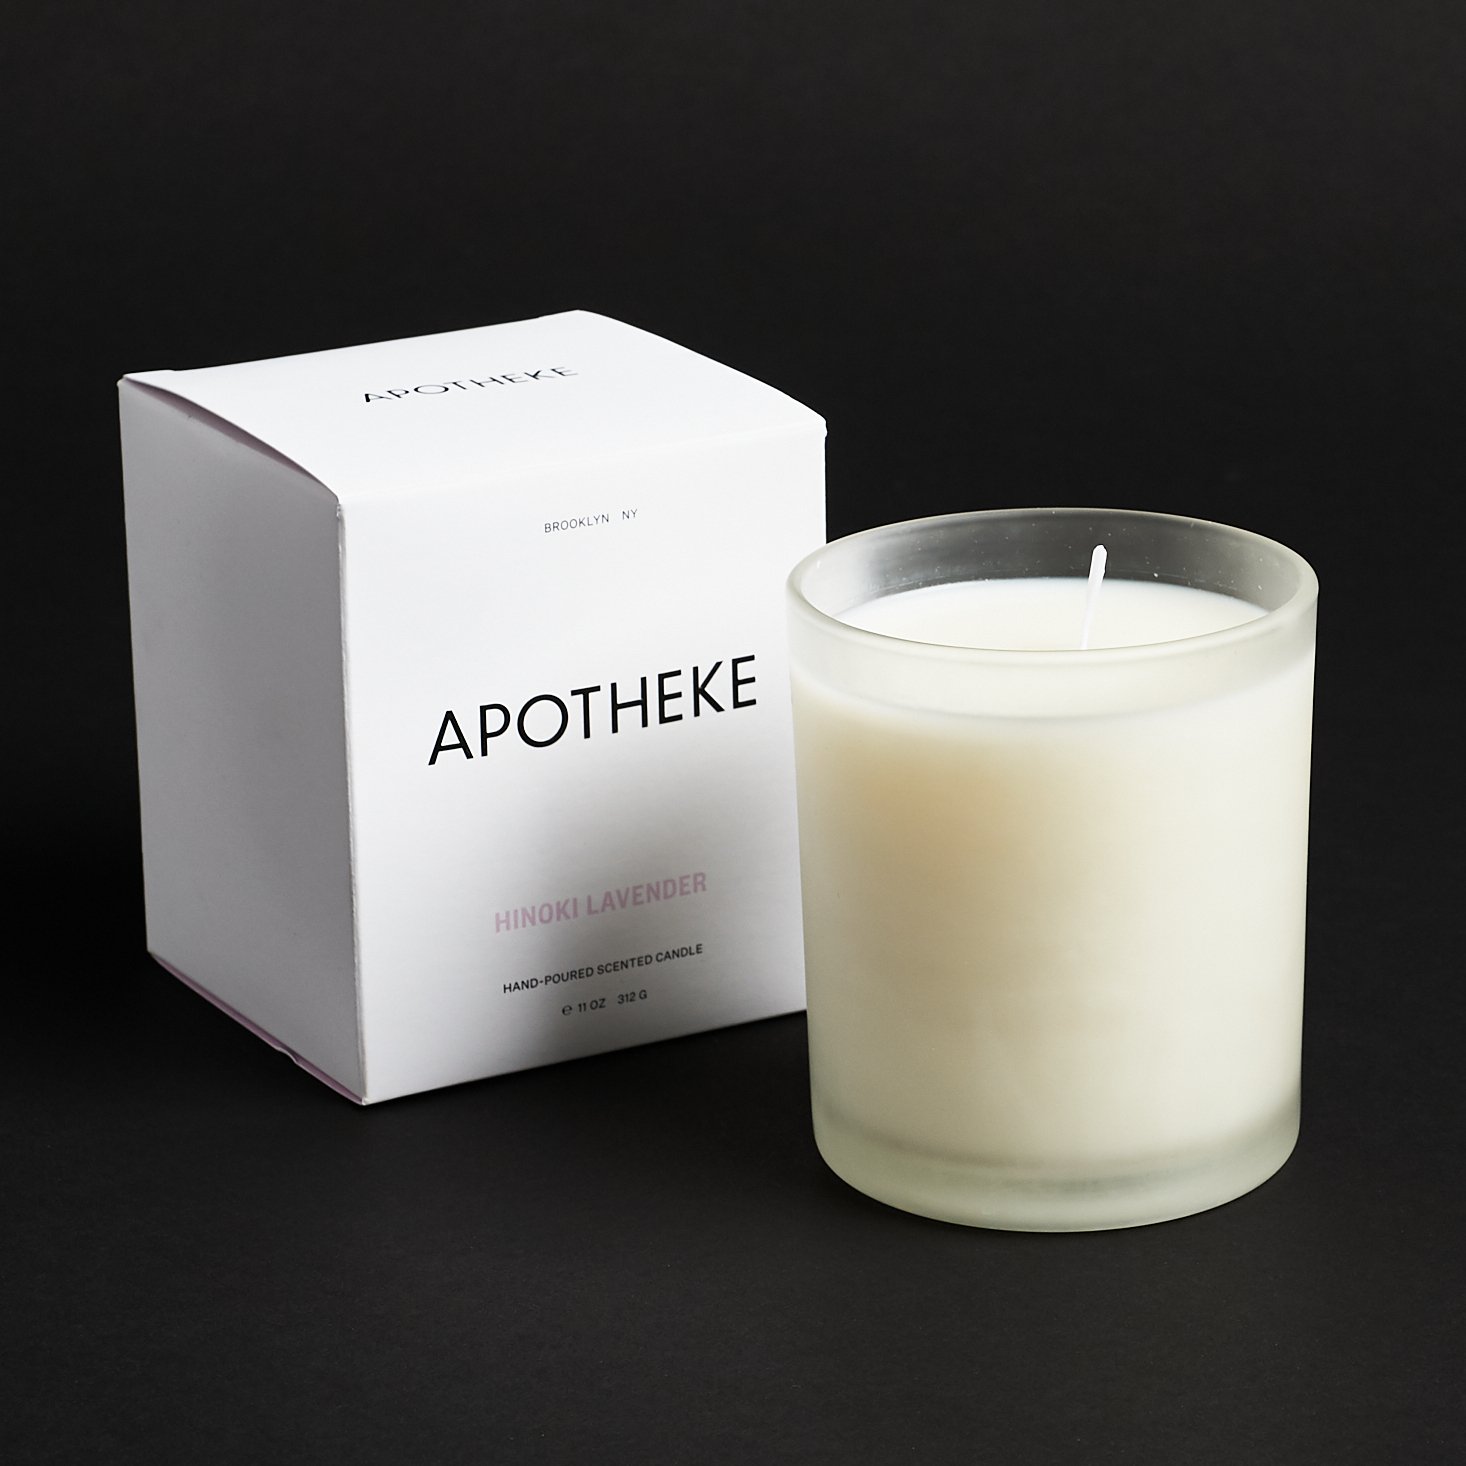 Apotheke Hinoki Lavender Candle with box